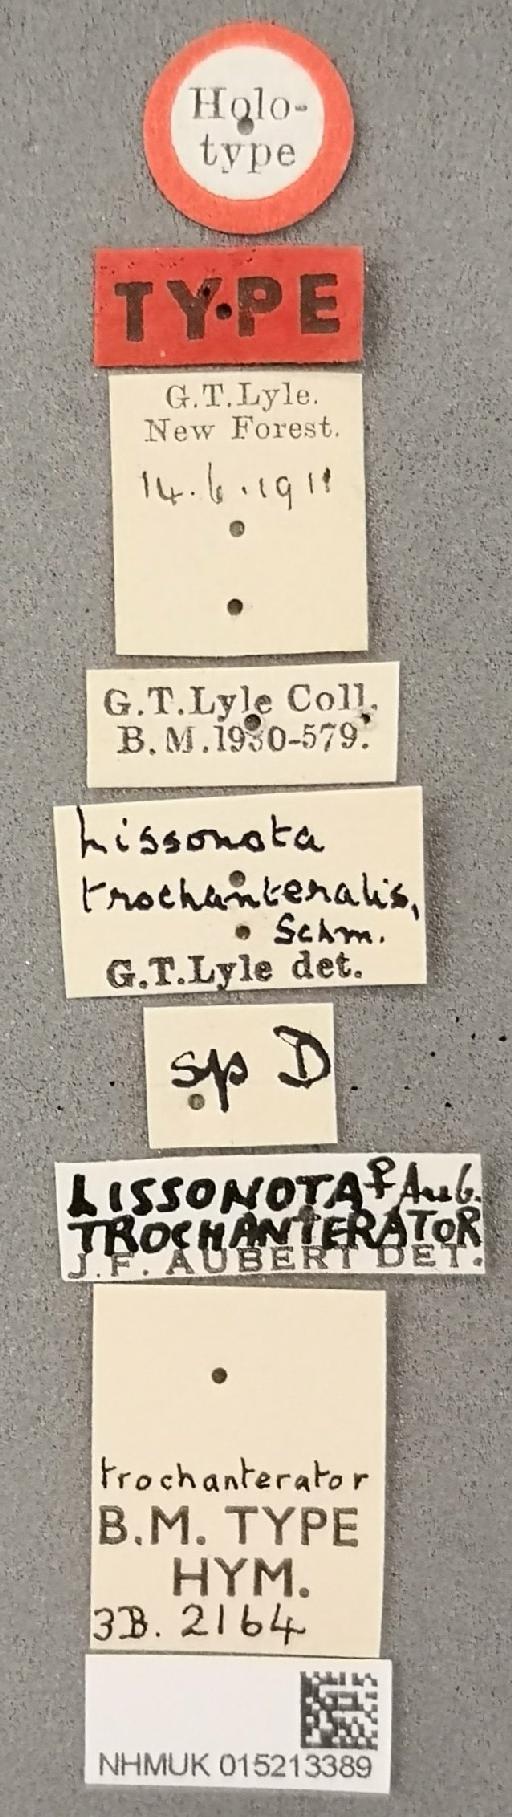 Lissonota trochanterator Aubert, 1972 - 015213389_Lissonota_trochanterator_holotype_labels